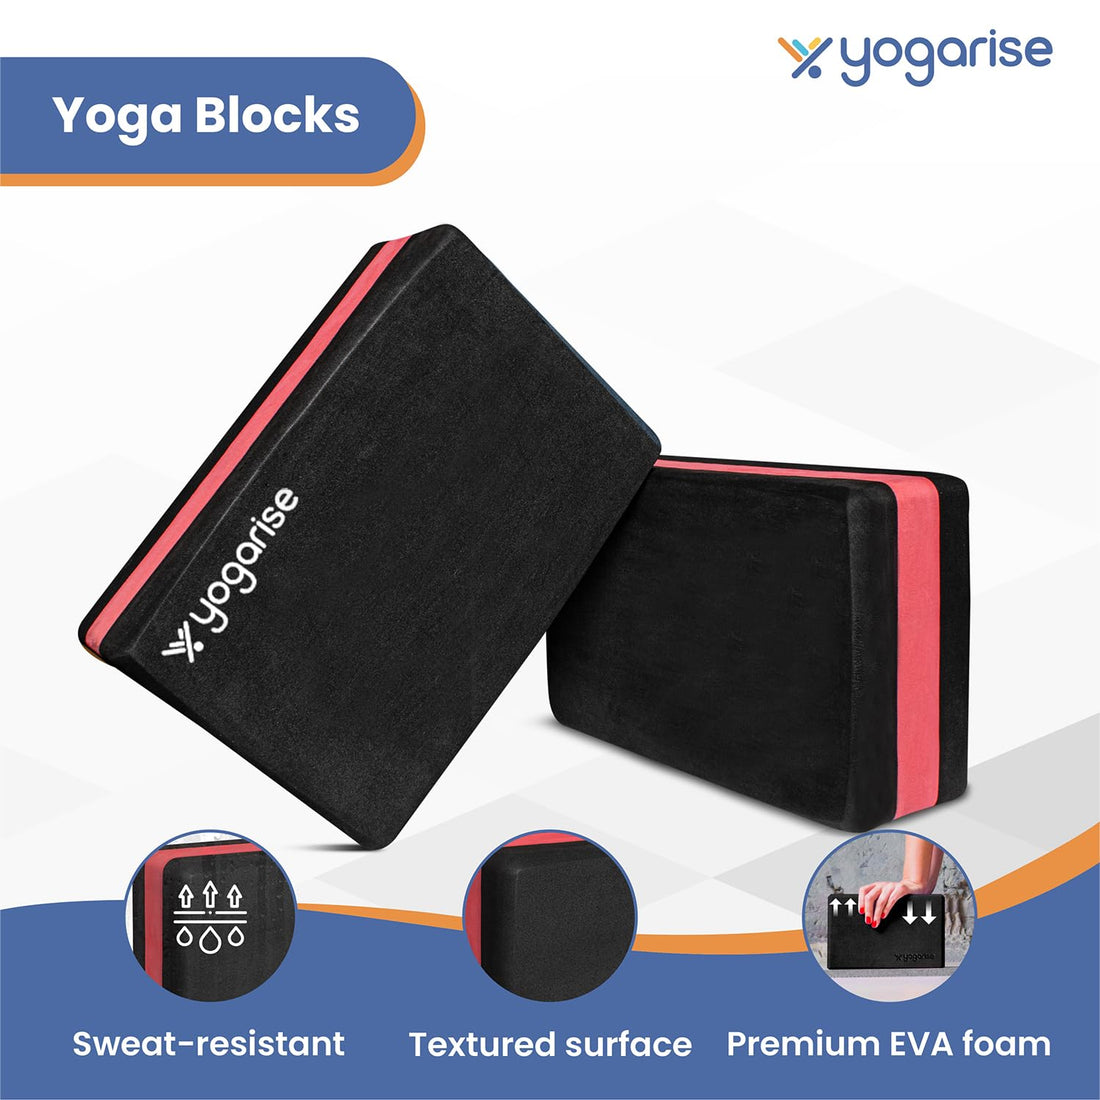 Yogarise Yoga Blocks for Yoga Practice, Exercise Blocks, Anti-slip Grip, High-Density EVA Foam, Round Edges For Comfortable Grip, Extra Large Size (Black and Red, Pack of 2)